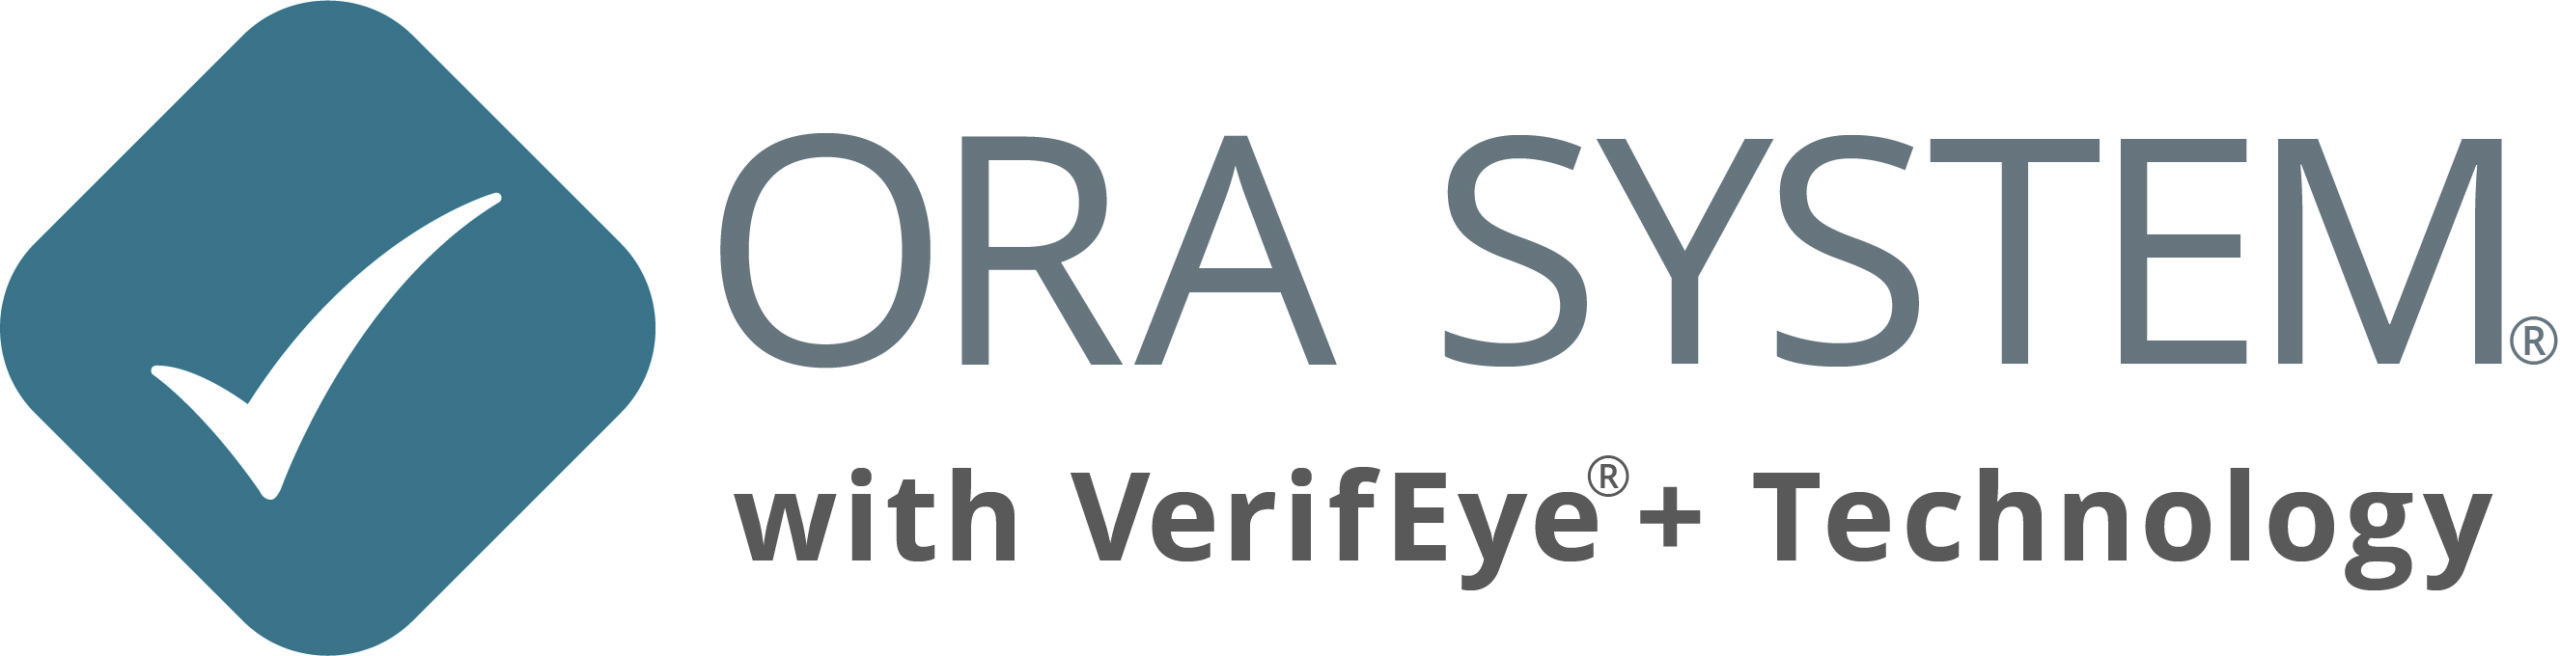 ora system with verifeye technology logo